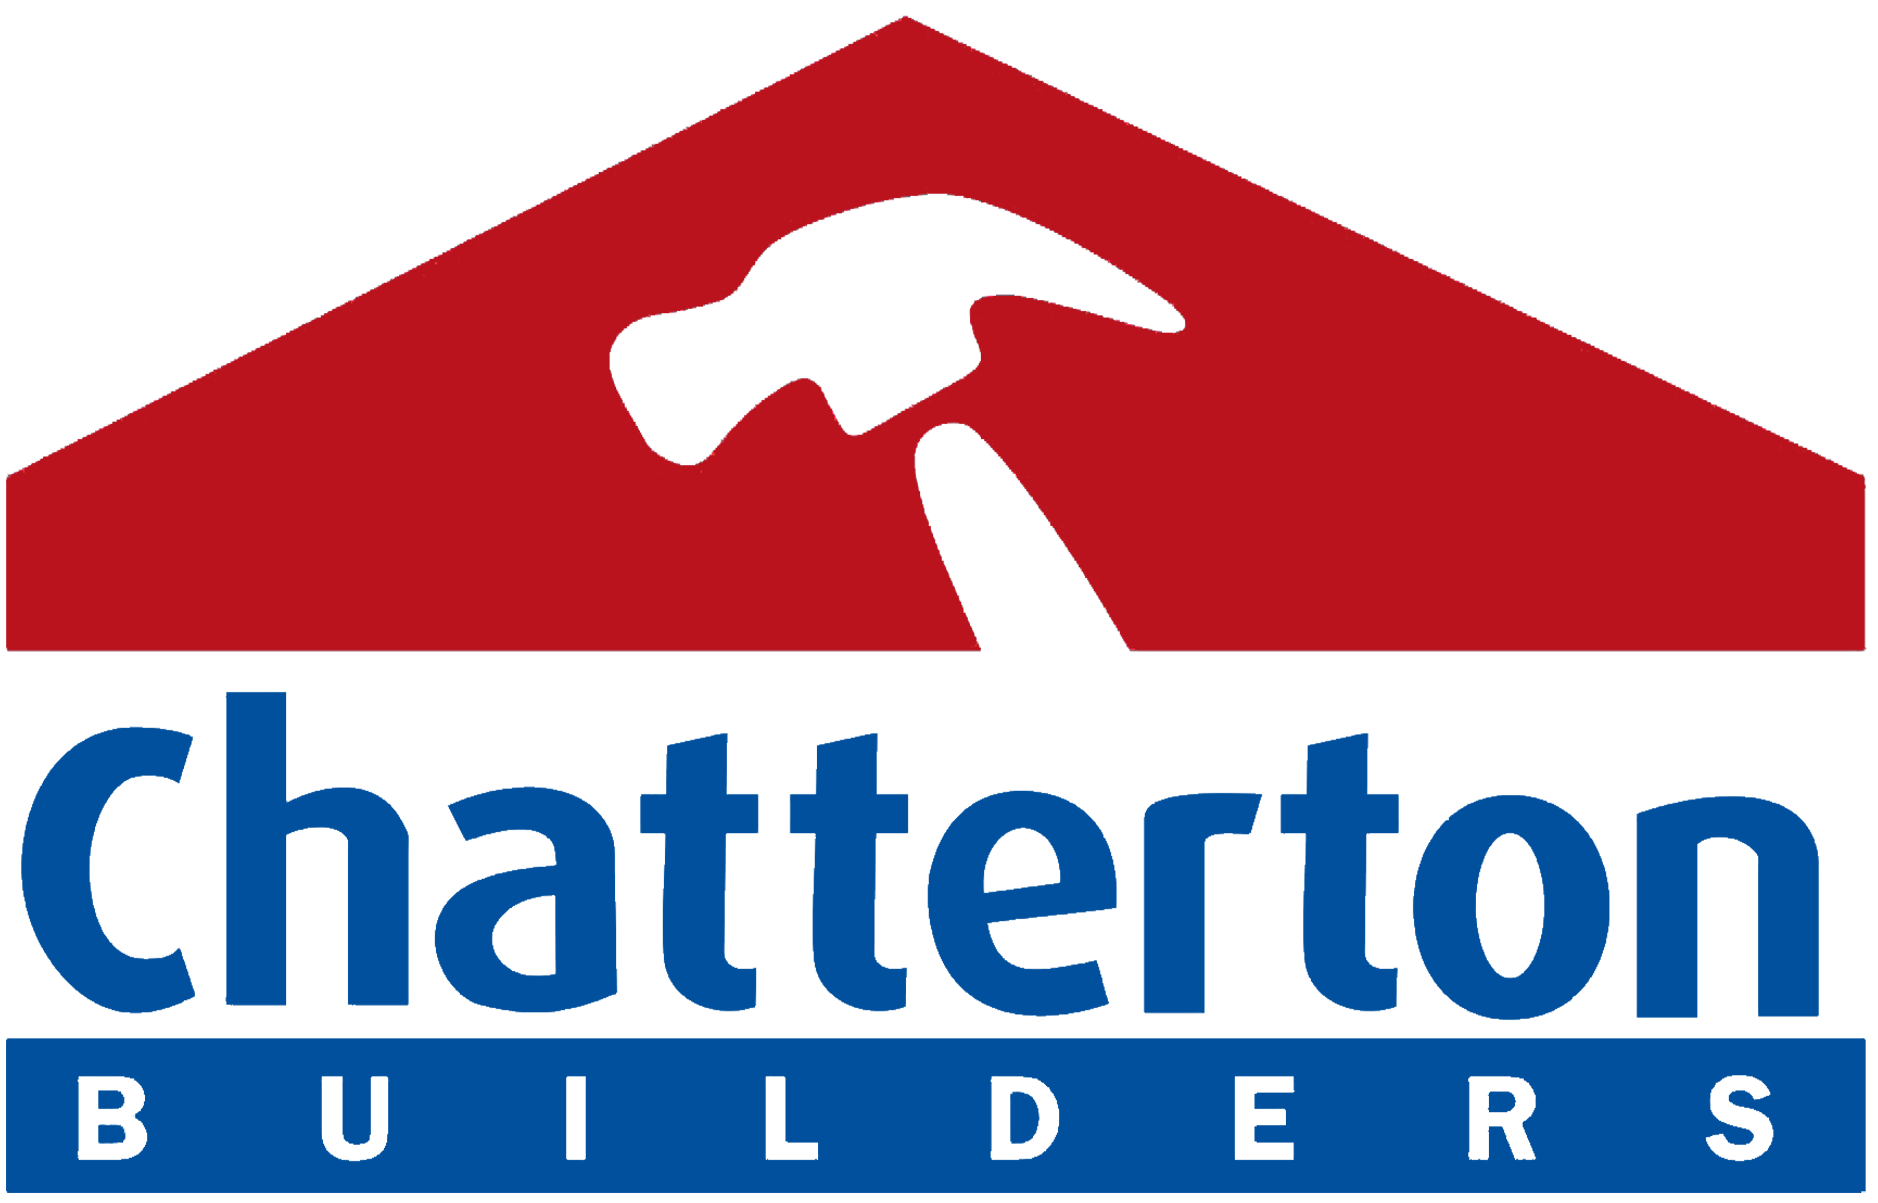 Chatterton Builders